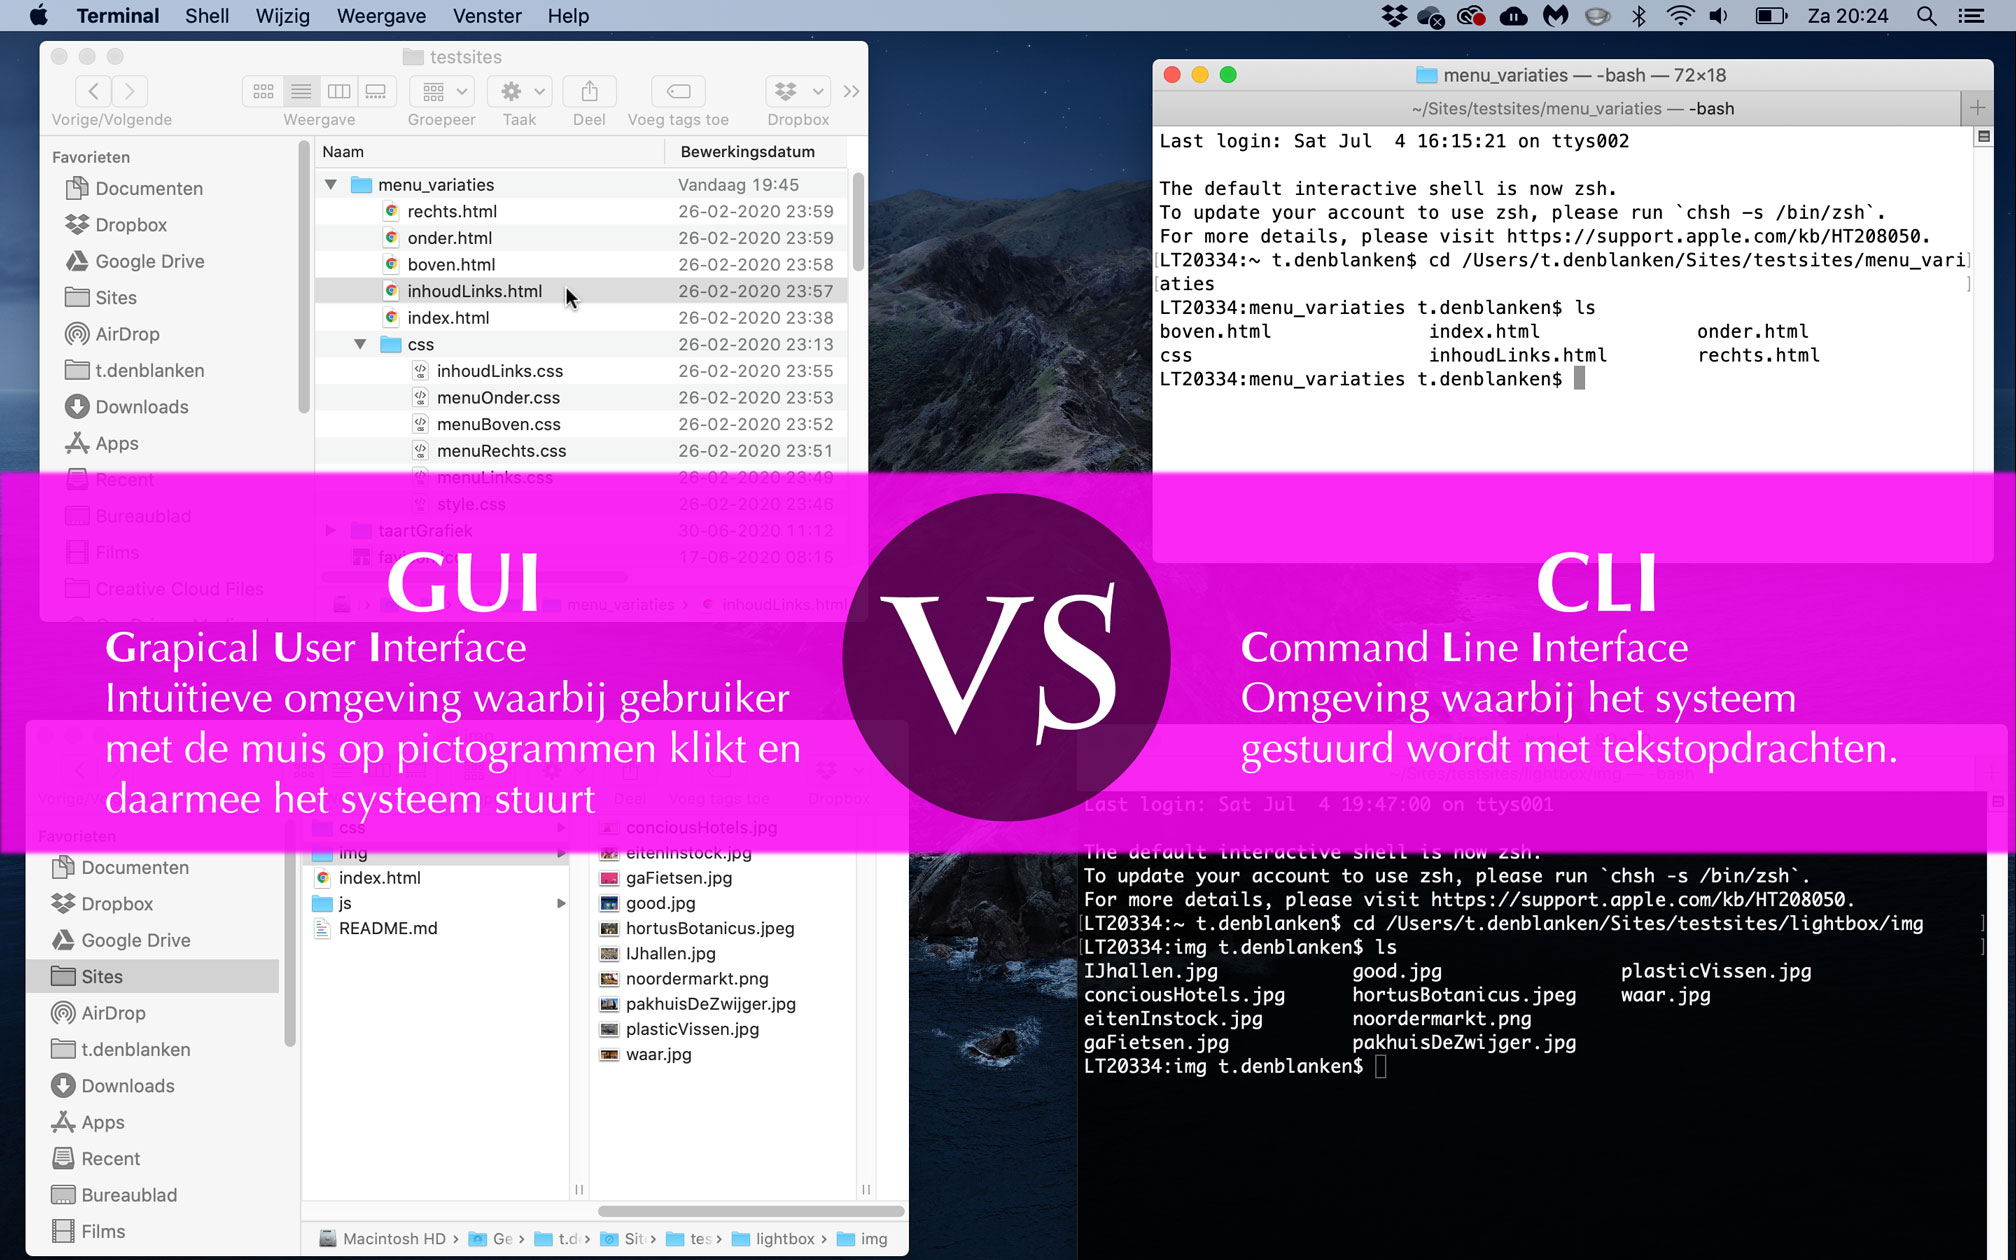 GUI vs CLI 